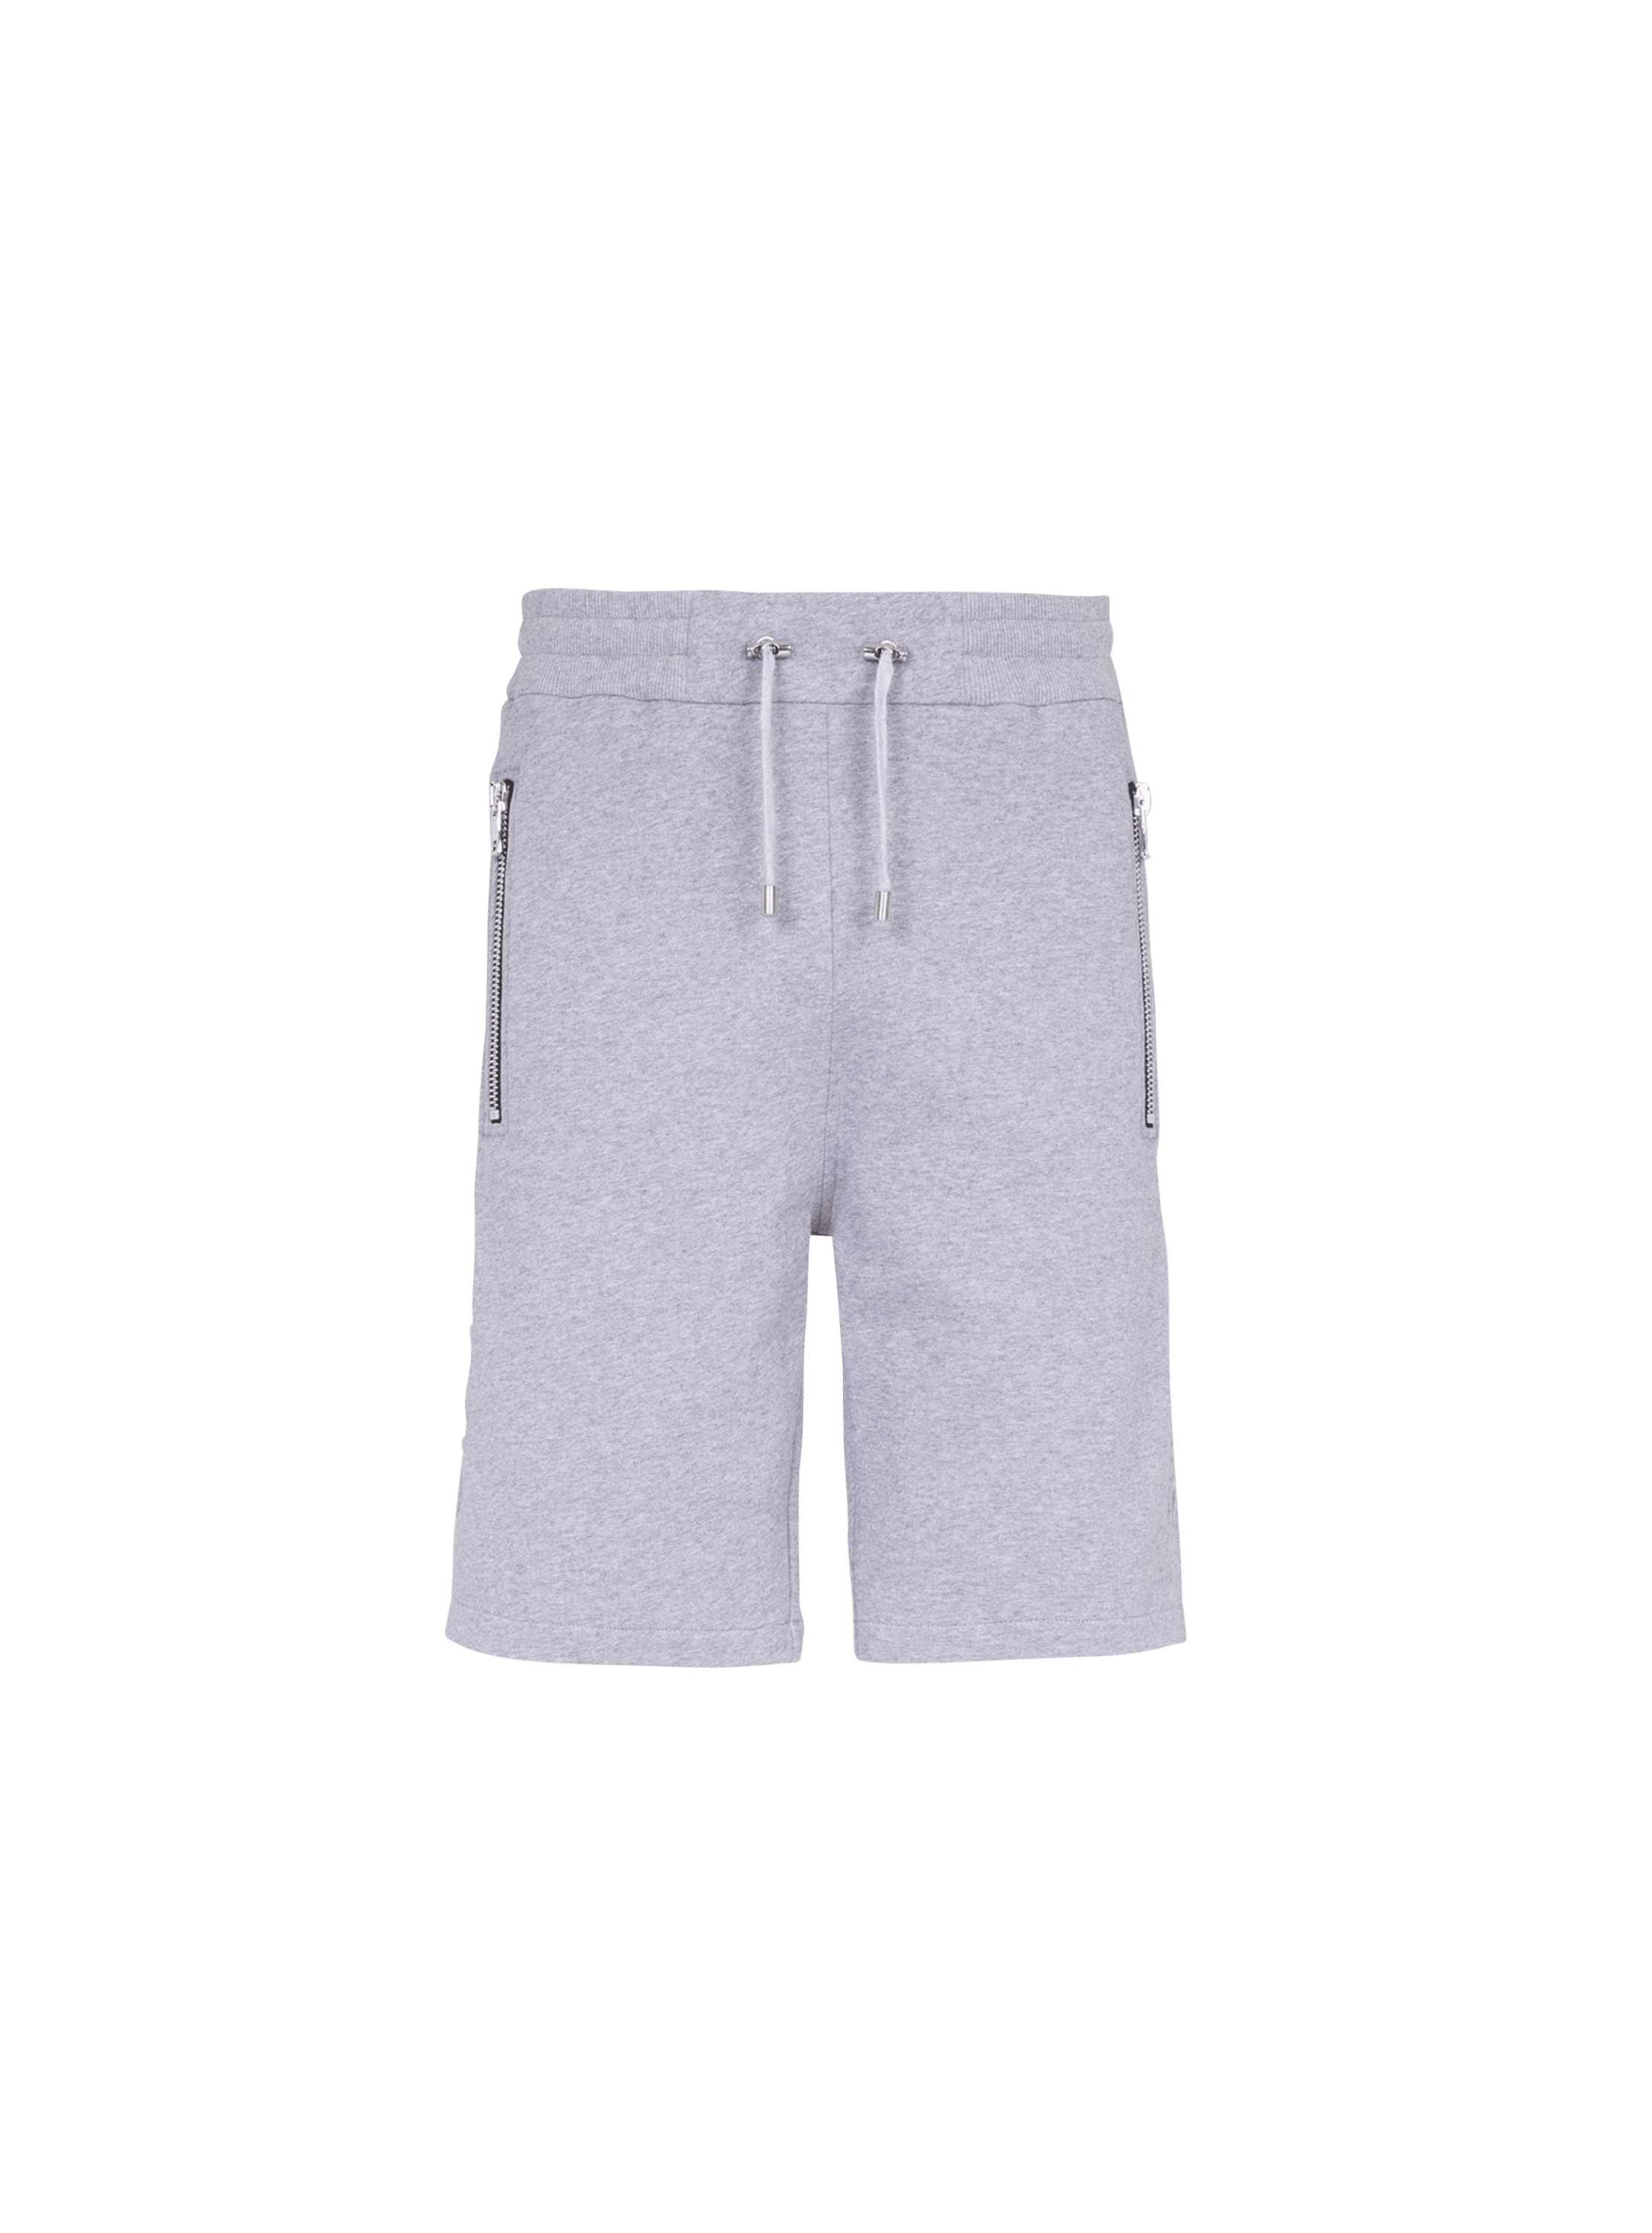 Cotton shorts with embossed Balmain logo, grey, hi-res